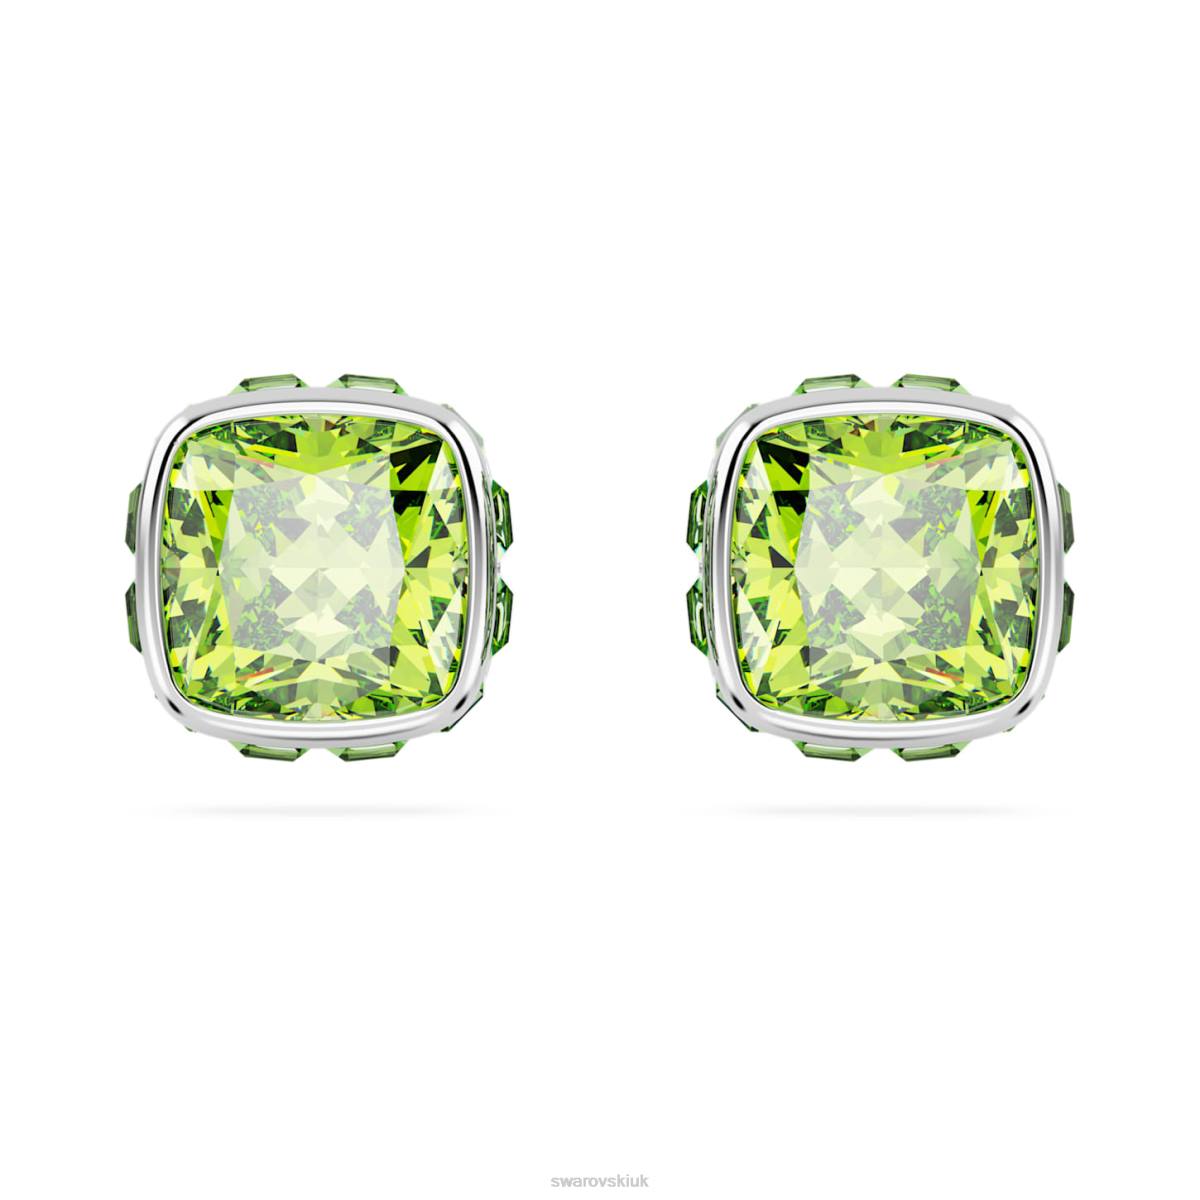 Jewelry Swarovski Birthstone stud earrings Square cut August, Green, Rhodium plated 48JX727